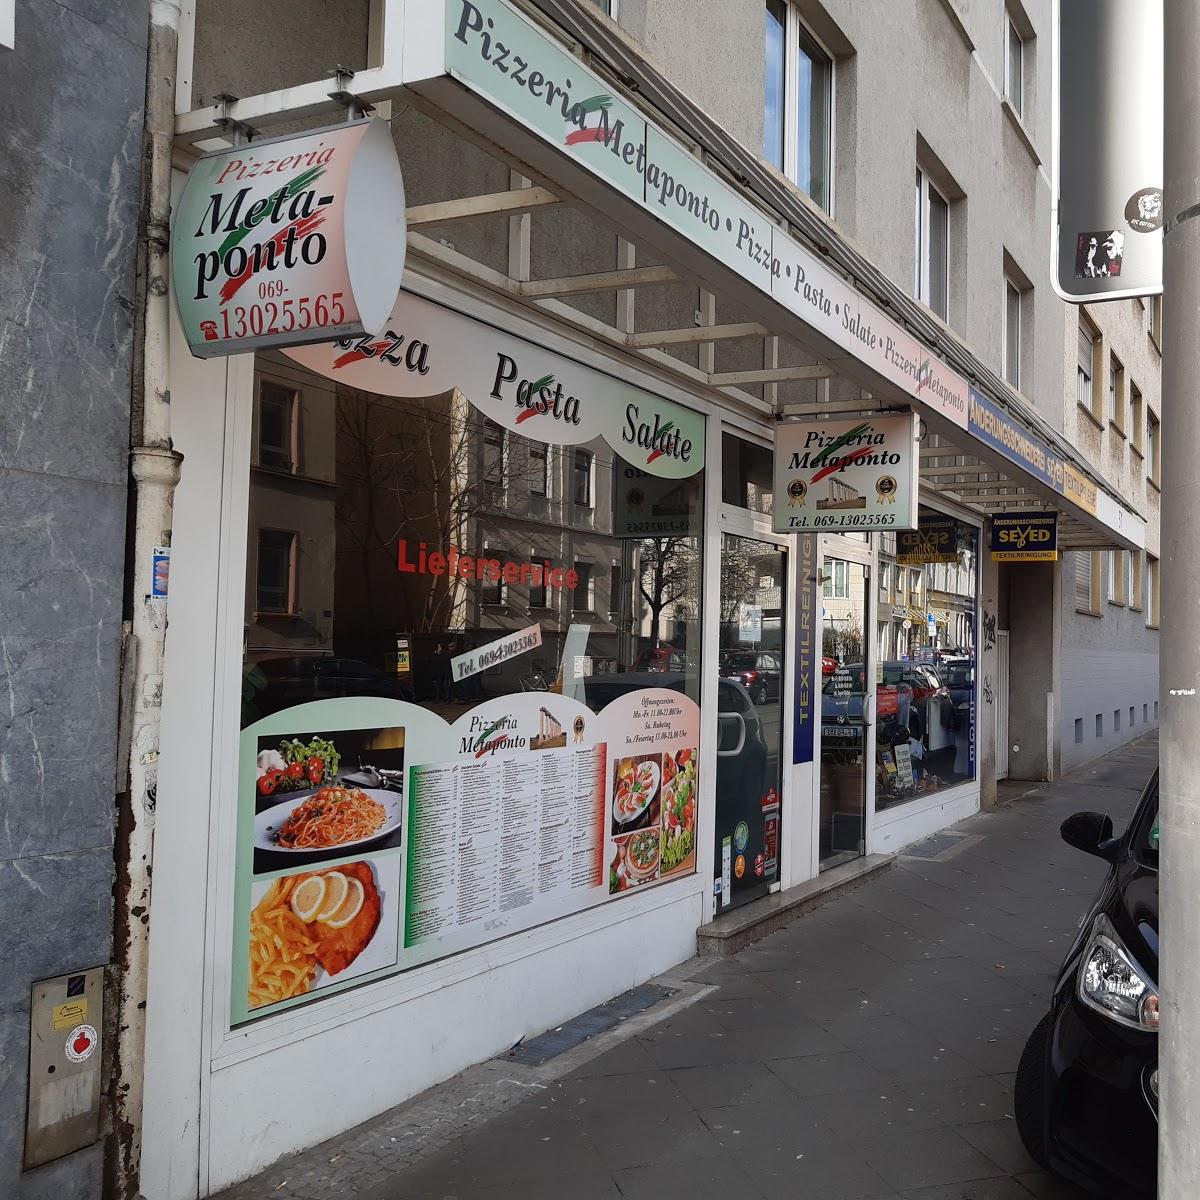 Restaurant "Pizzeria Metaponto" in Frankfurt am Main